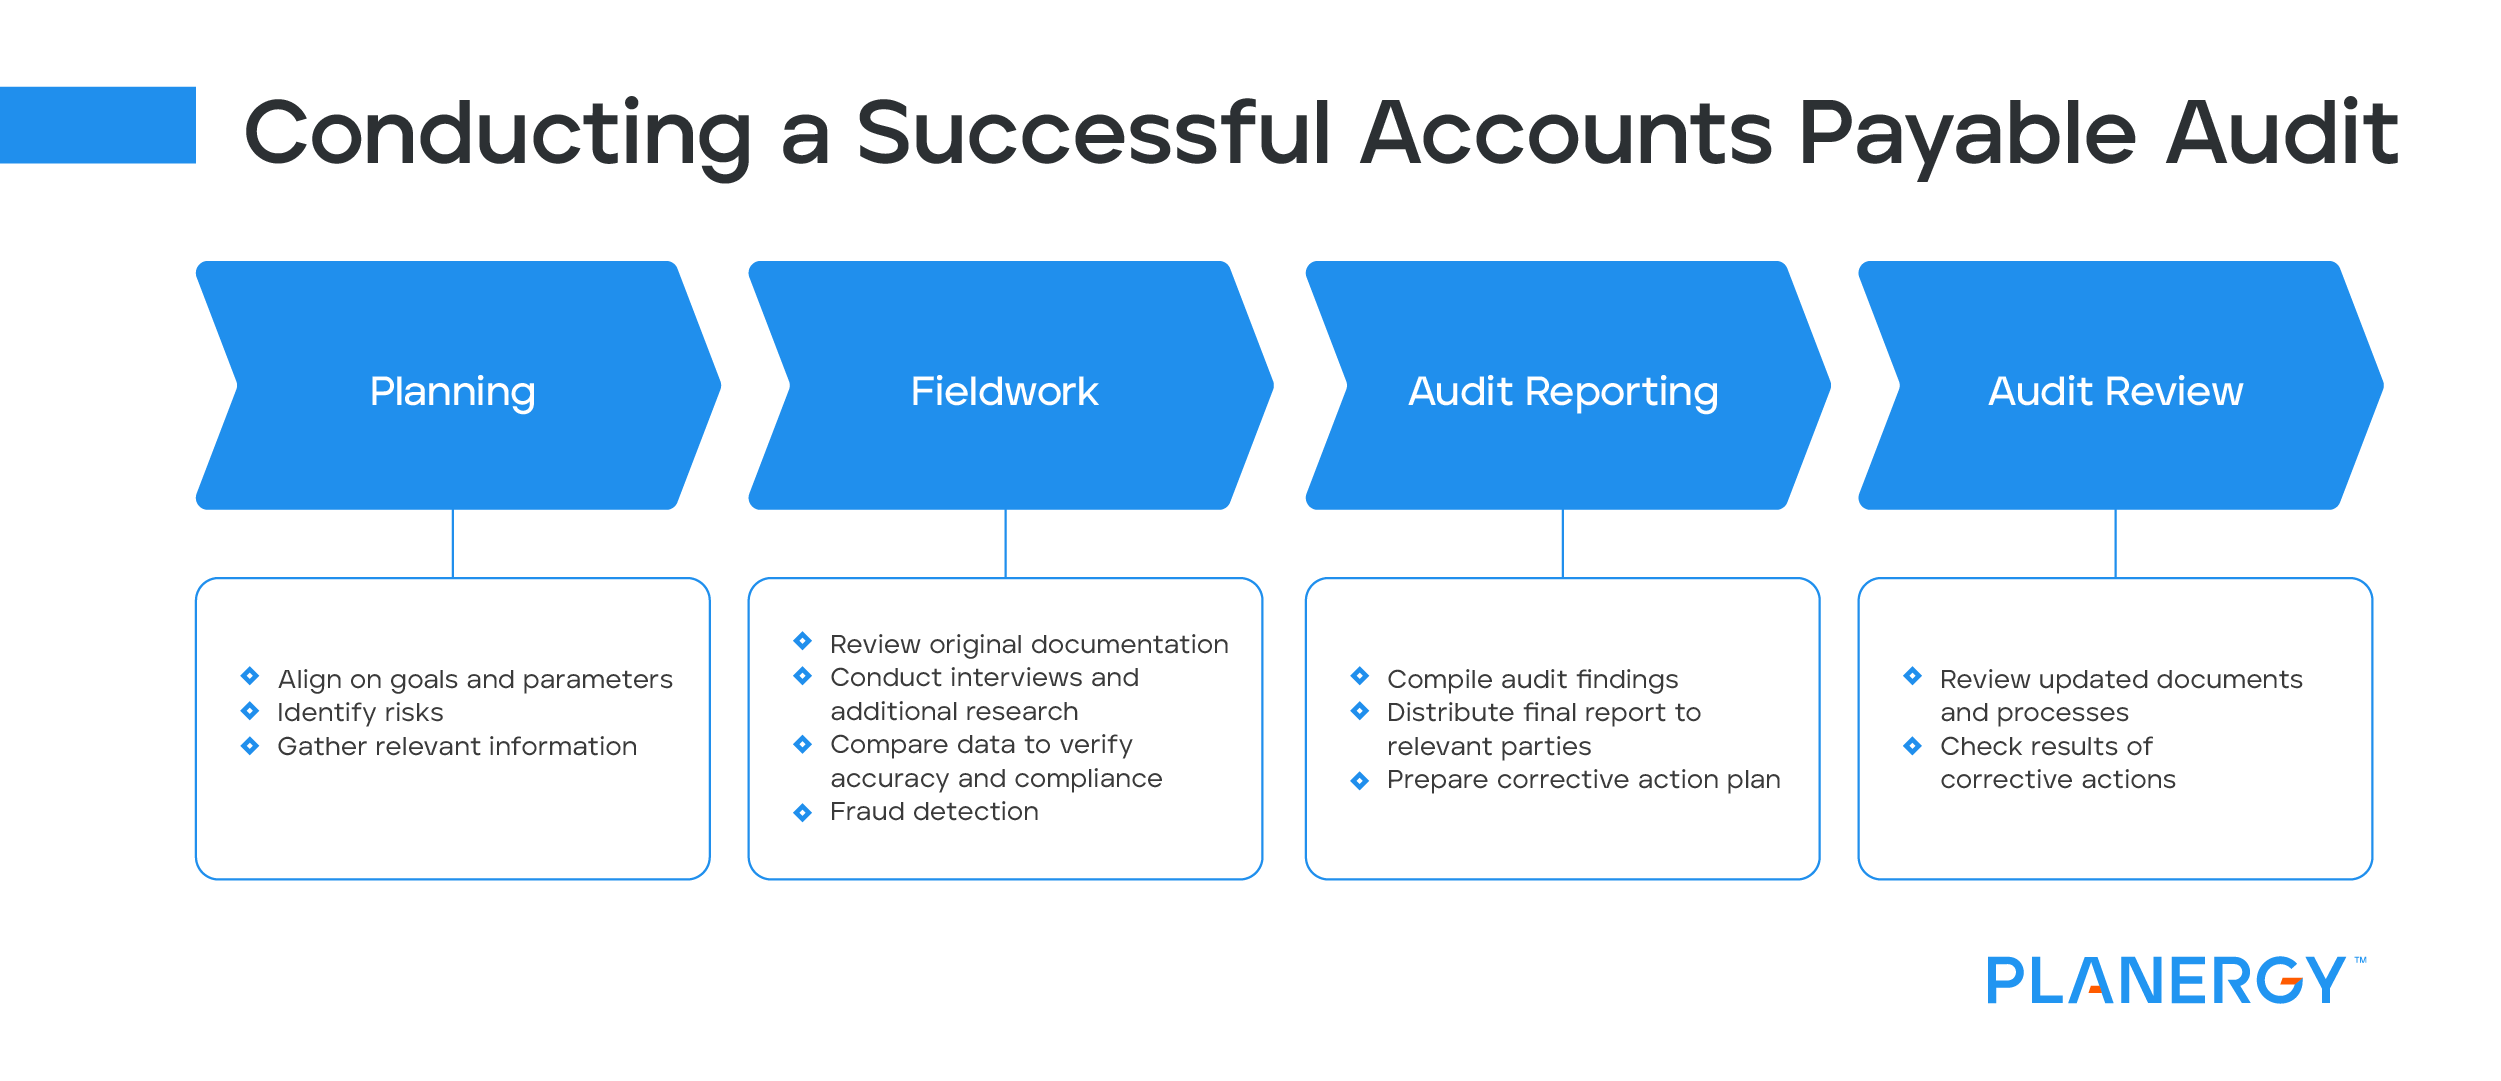 Conducting Successful Accounts Payable Auditing